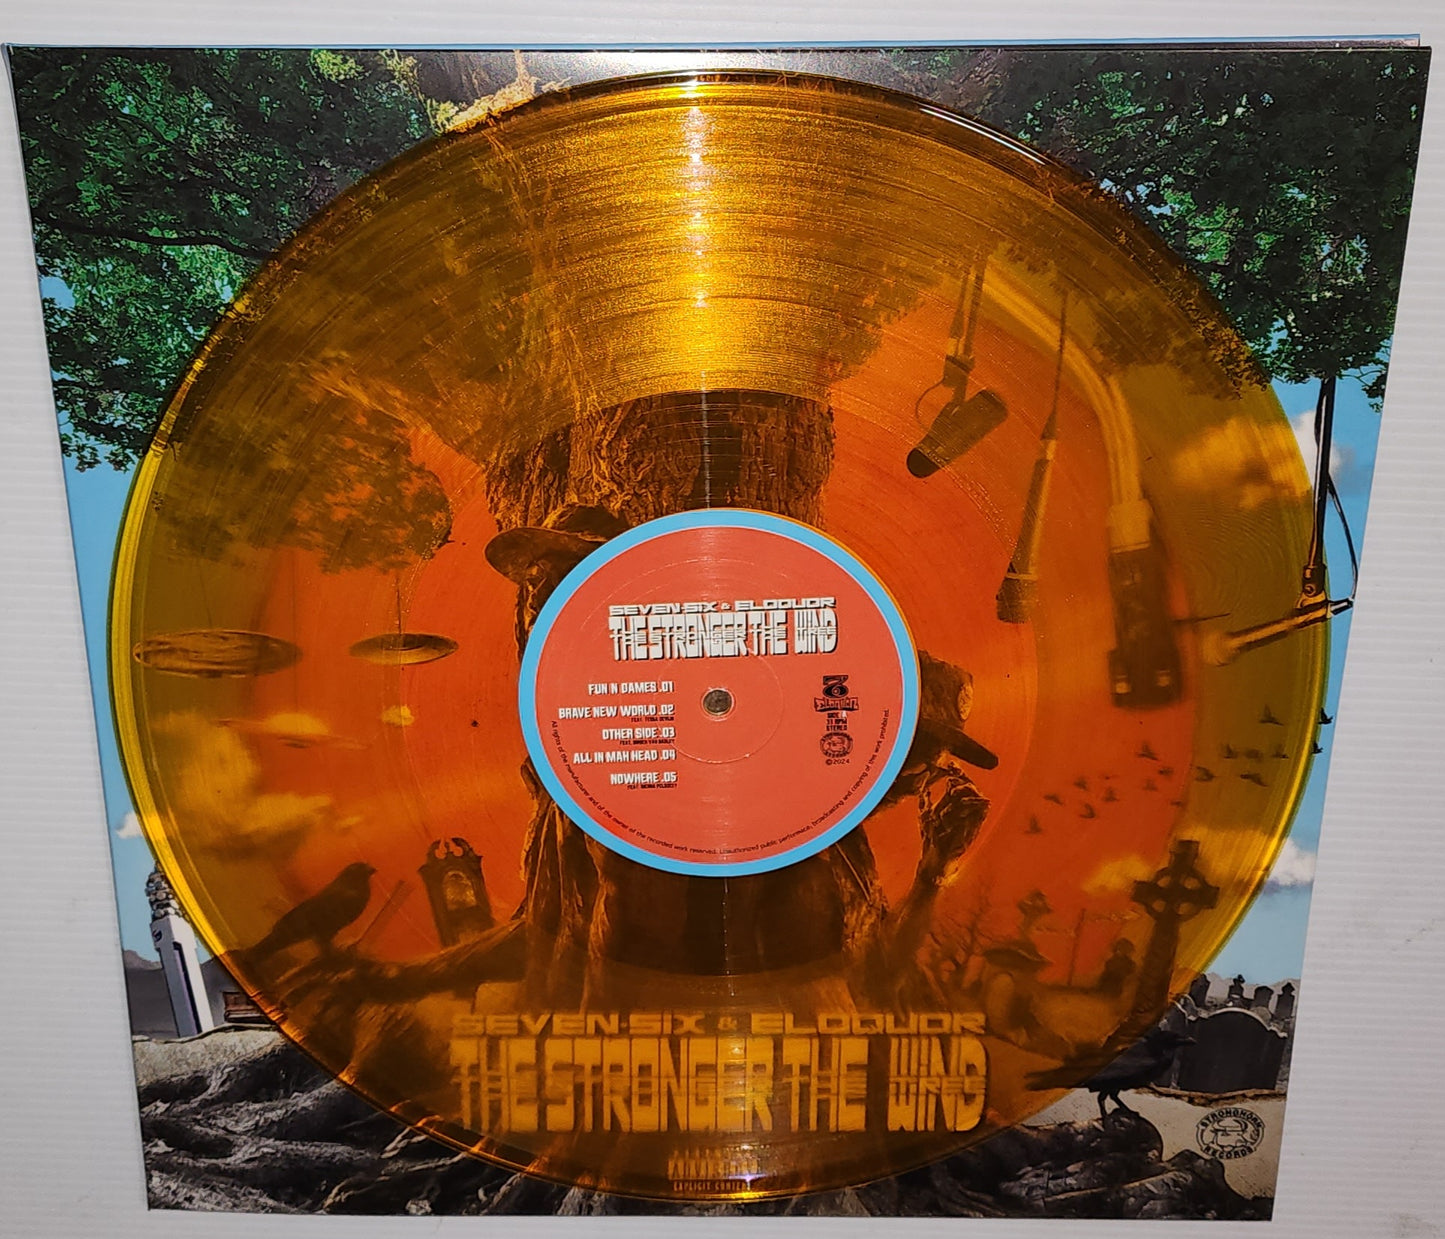 Seven Six & Eloquor - The Stronger The Wind The Stronger The Tree (2024) (Translucent Orange Colour Vinyl LP)